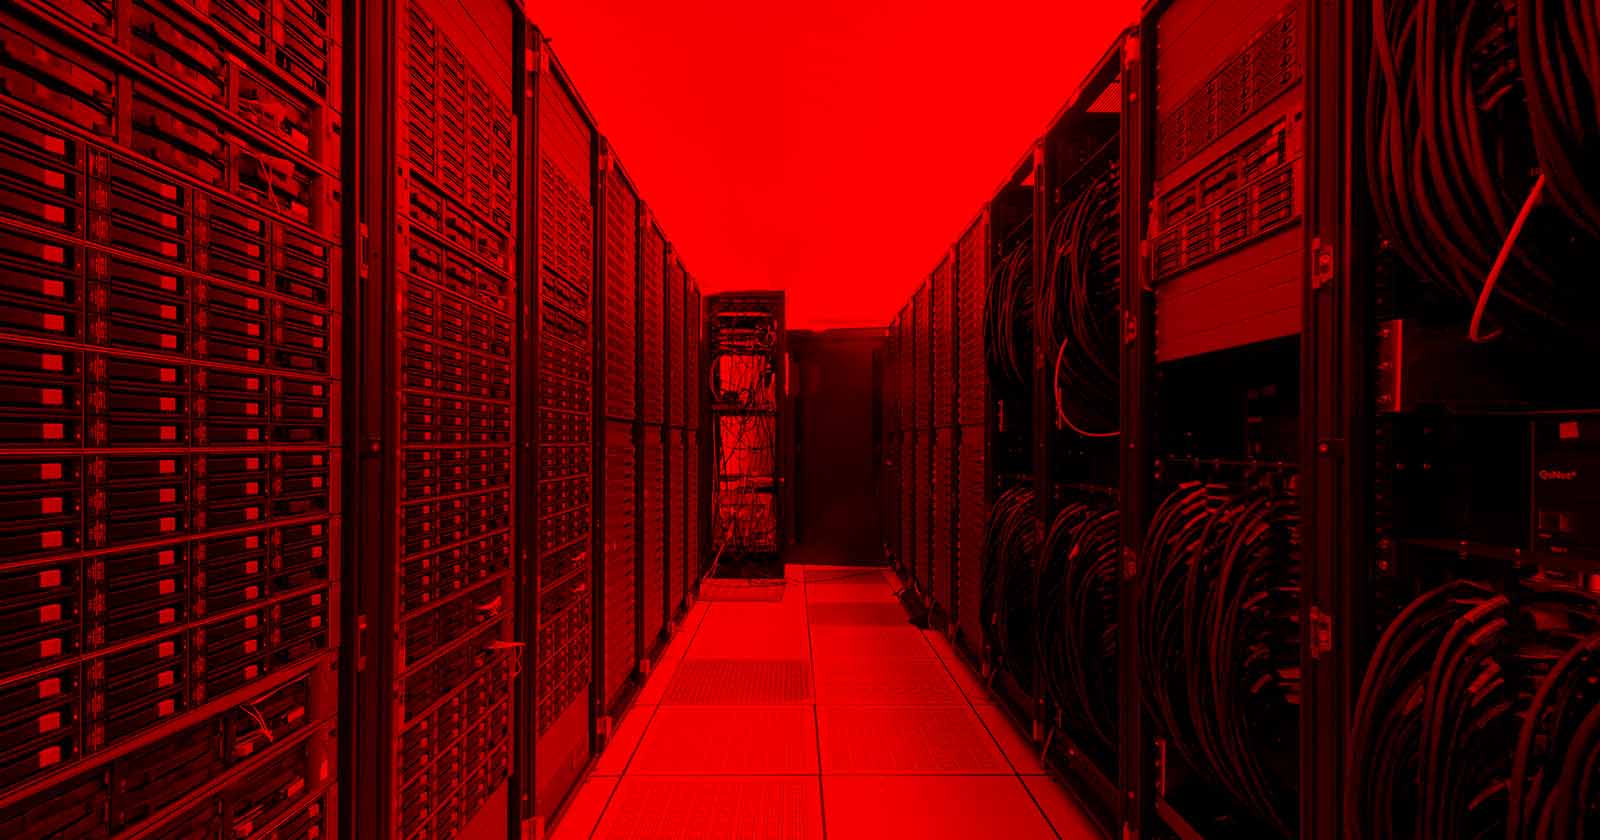 fire suppression for data centers